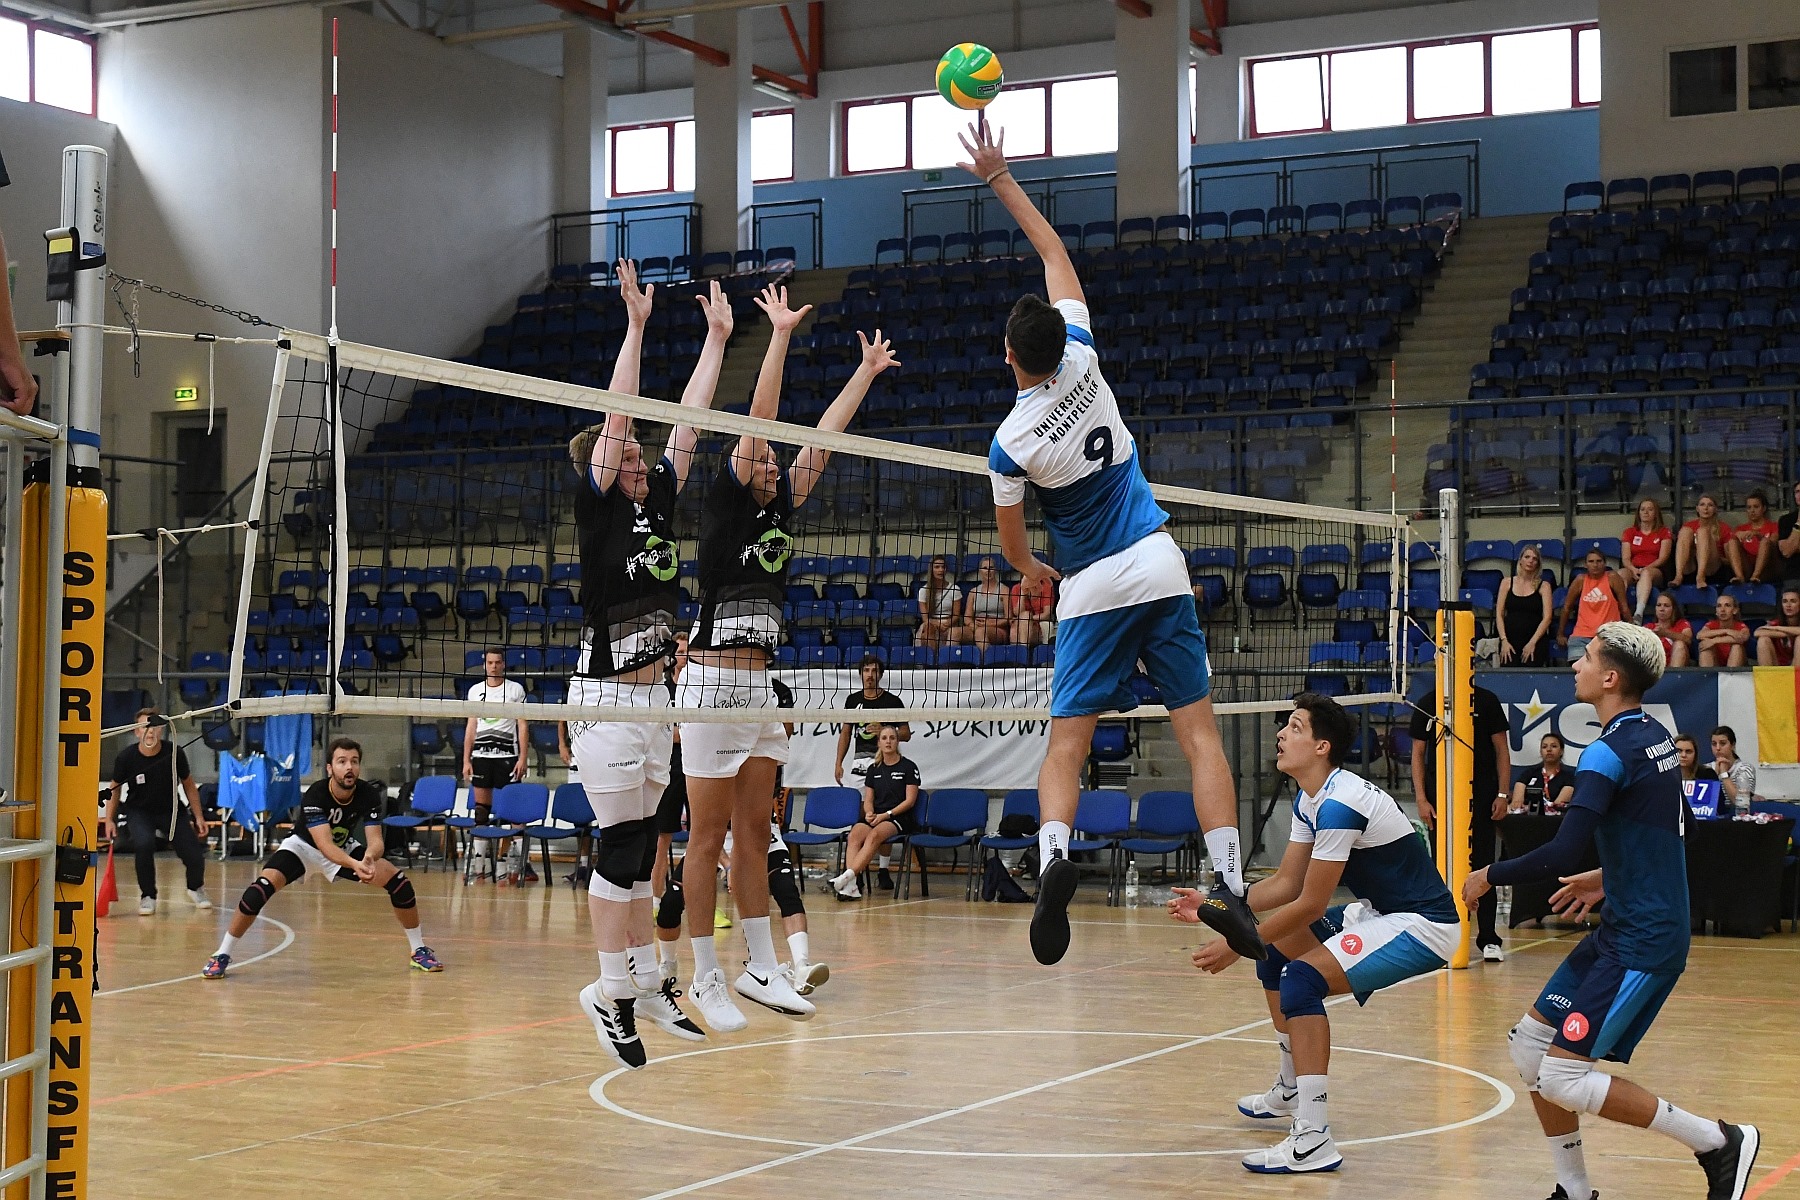 European Universities Volleyball Championship in Lodz